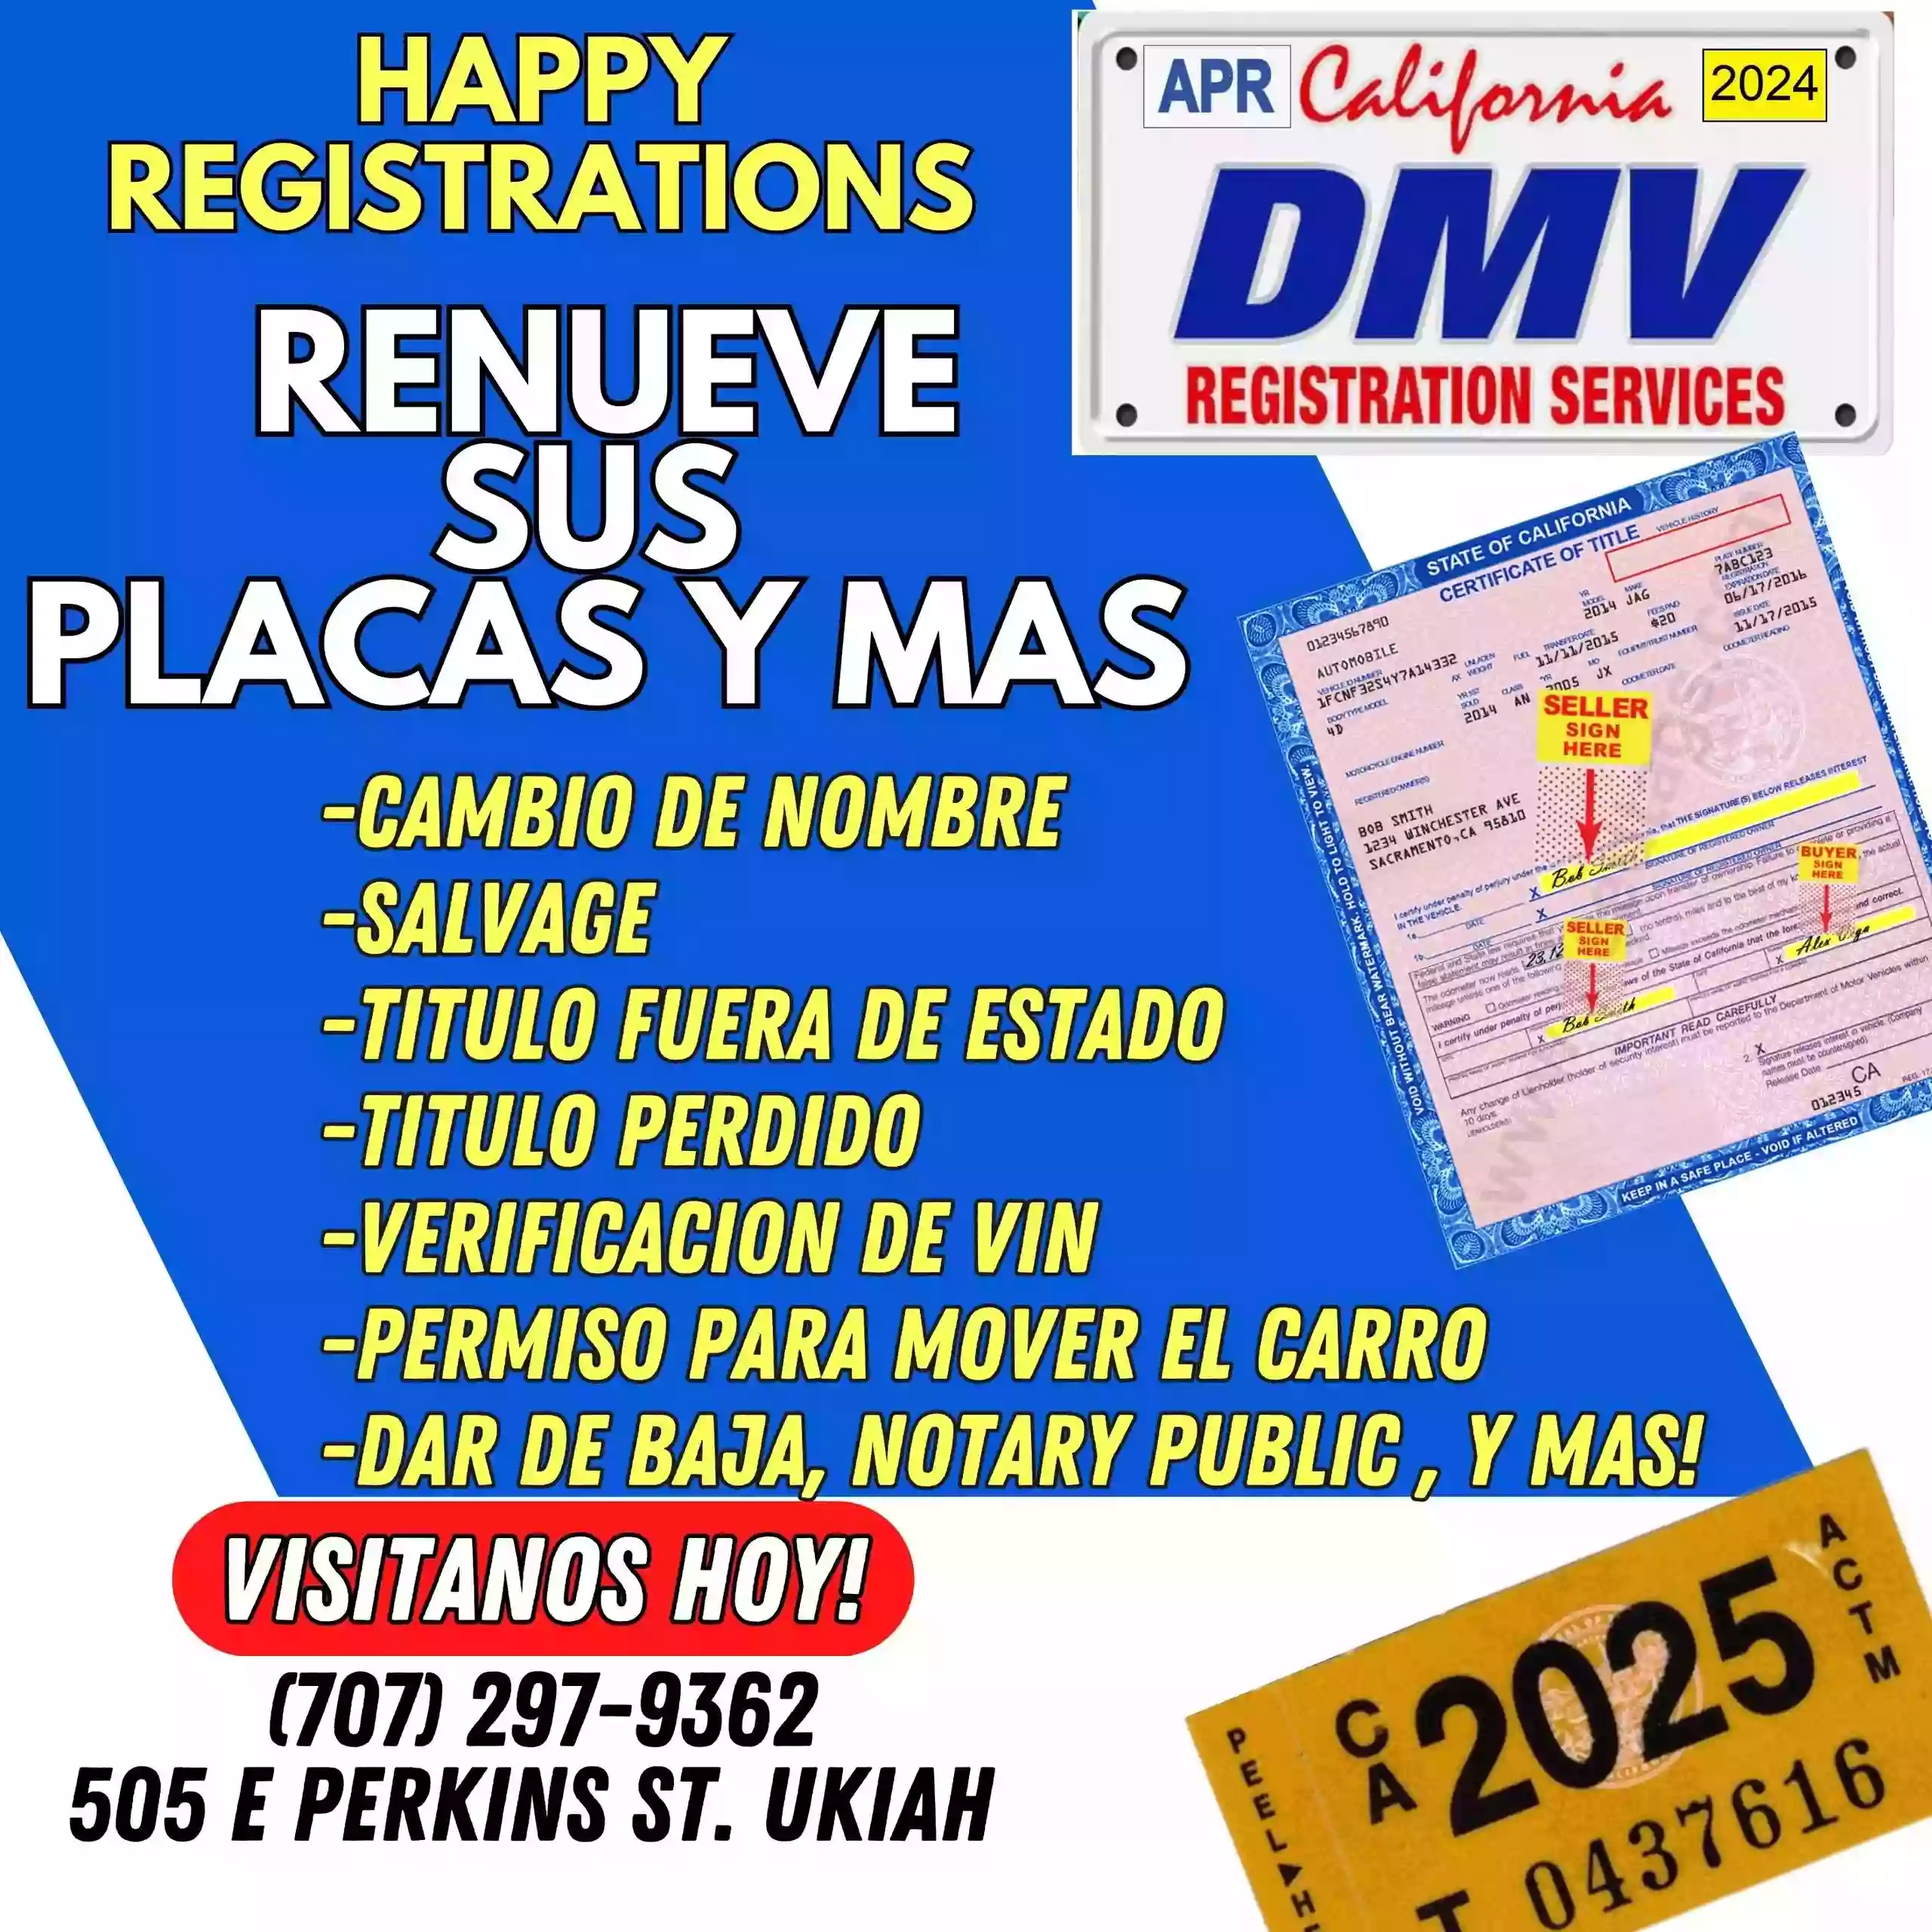 Happy Registrations DMV Registration Renewal, Transfer, Vin Verification, Insurance, Notary Public